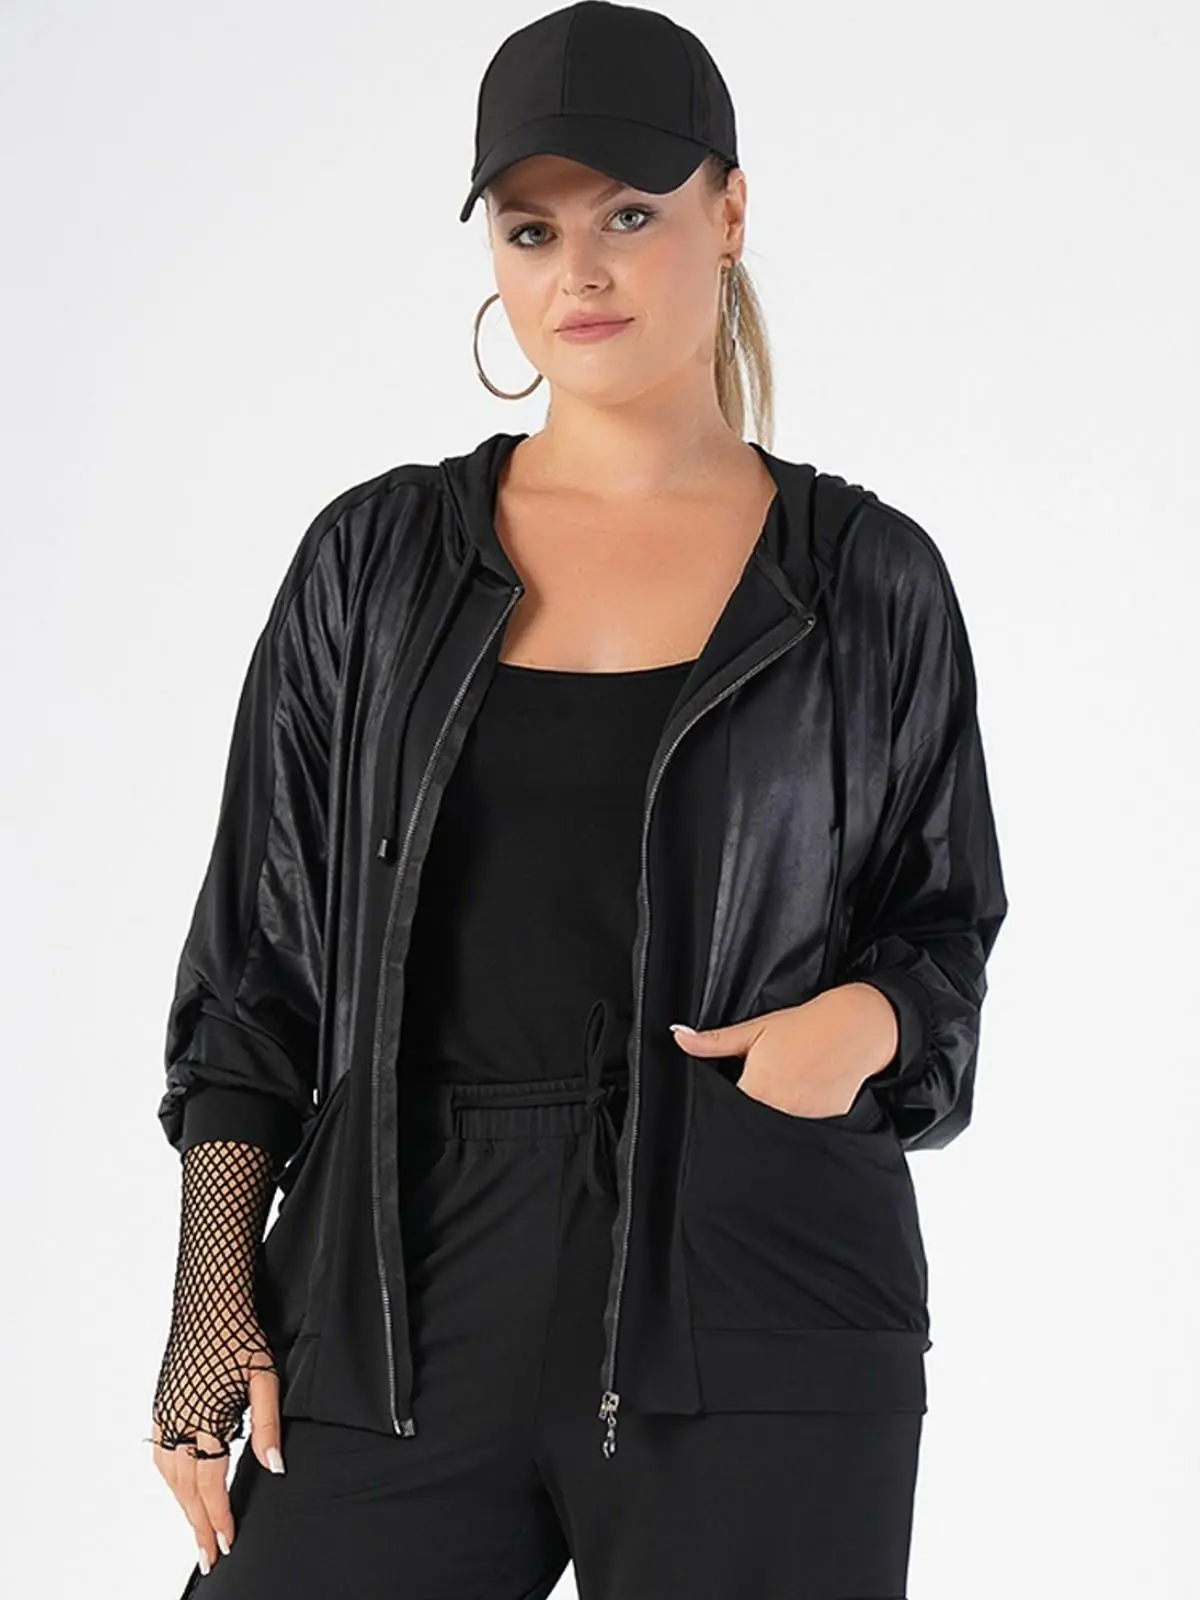 Hooded Leather Accessories Zippered Black Plus Size Winter Jacket New Season Women's Outwear 4xl 5xl 6xl